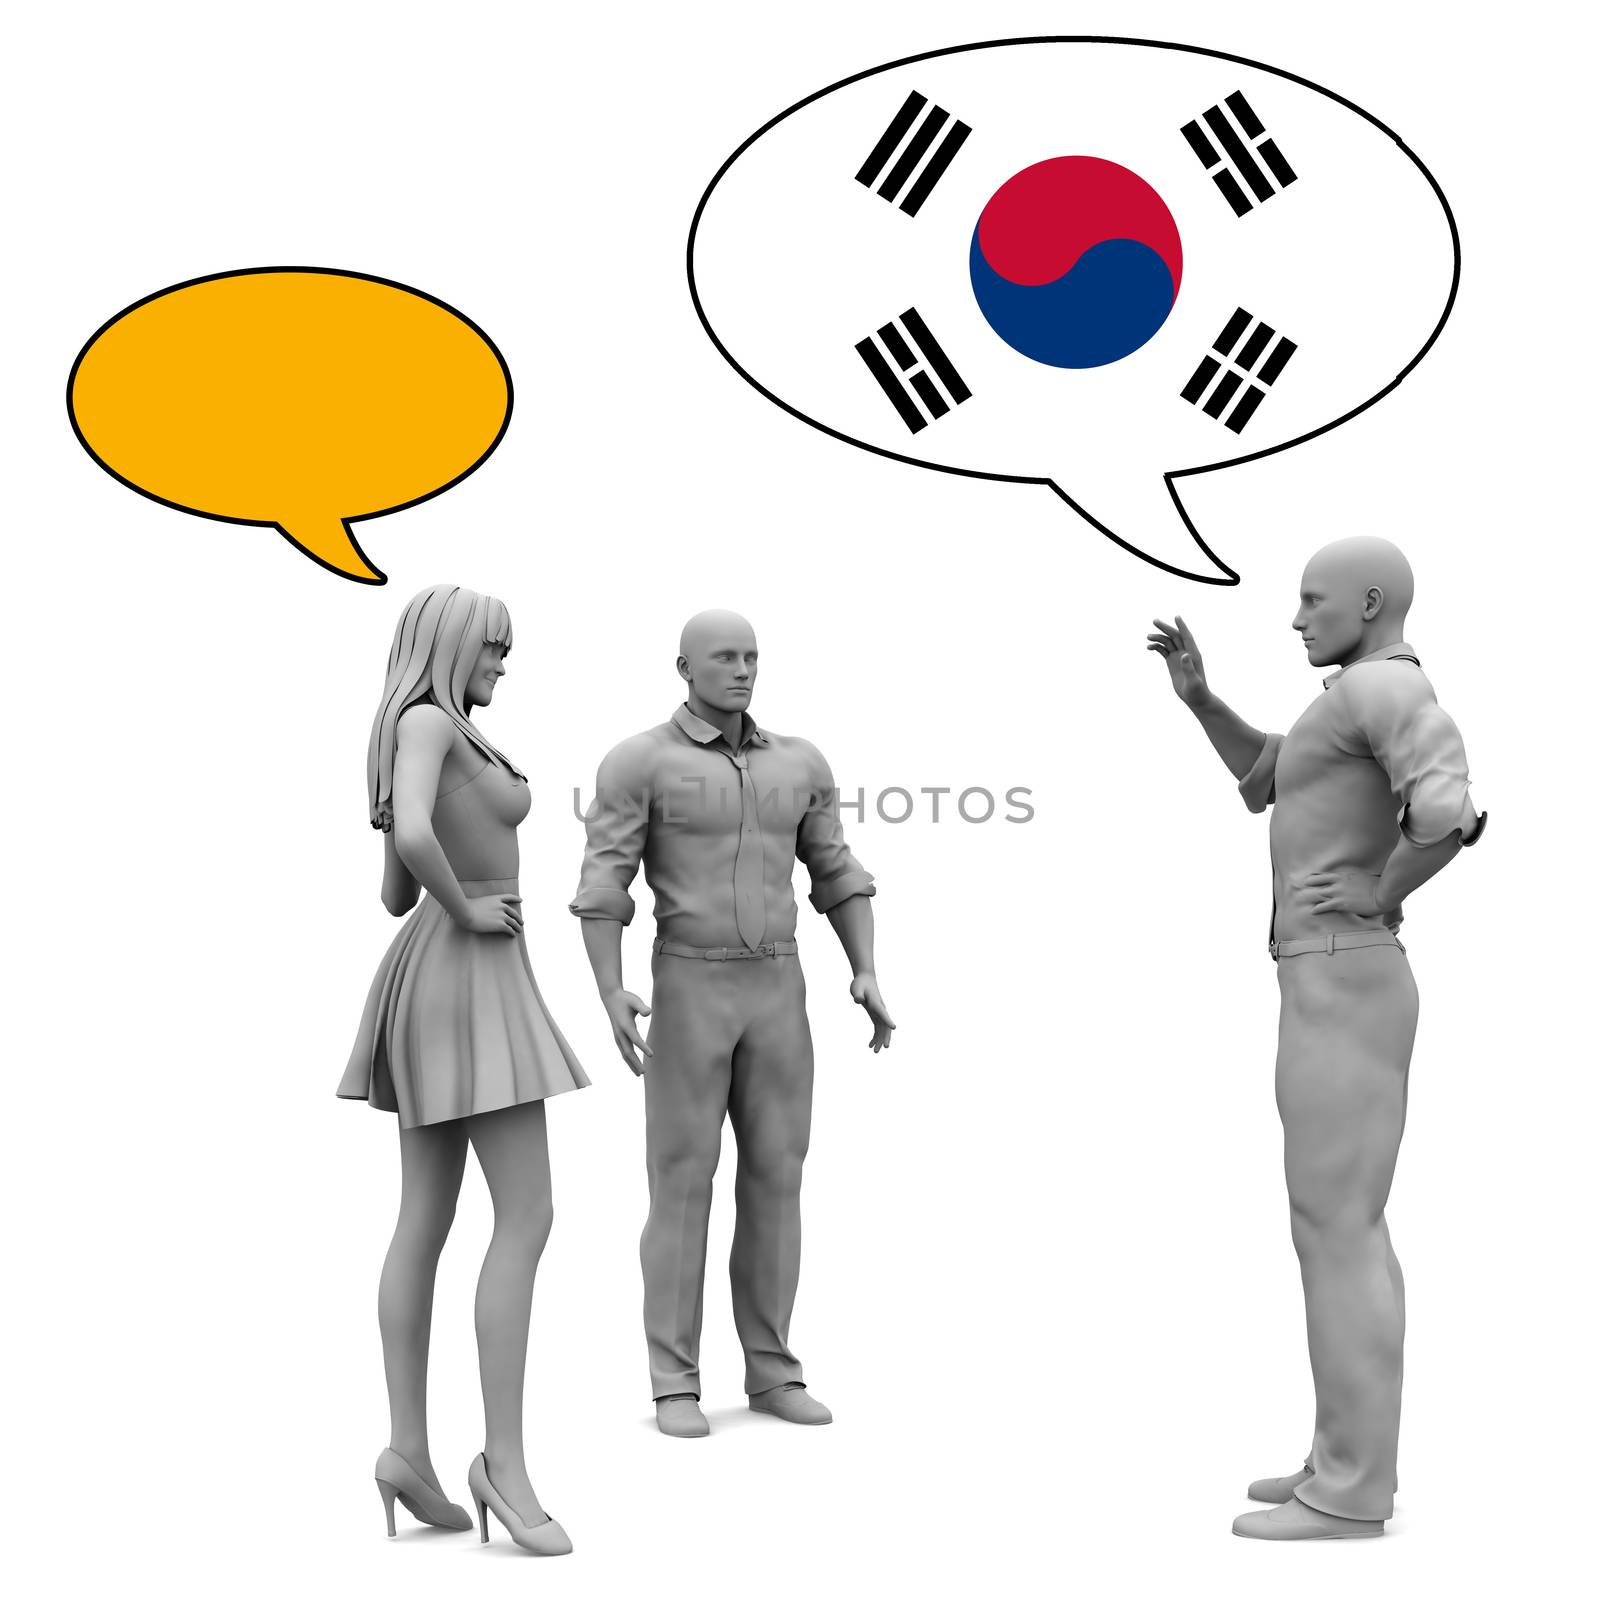 Learn Korean by kentoh